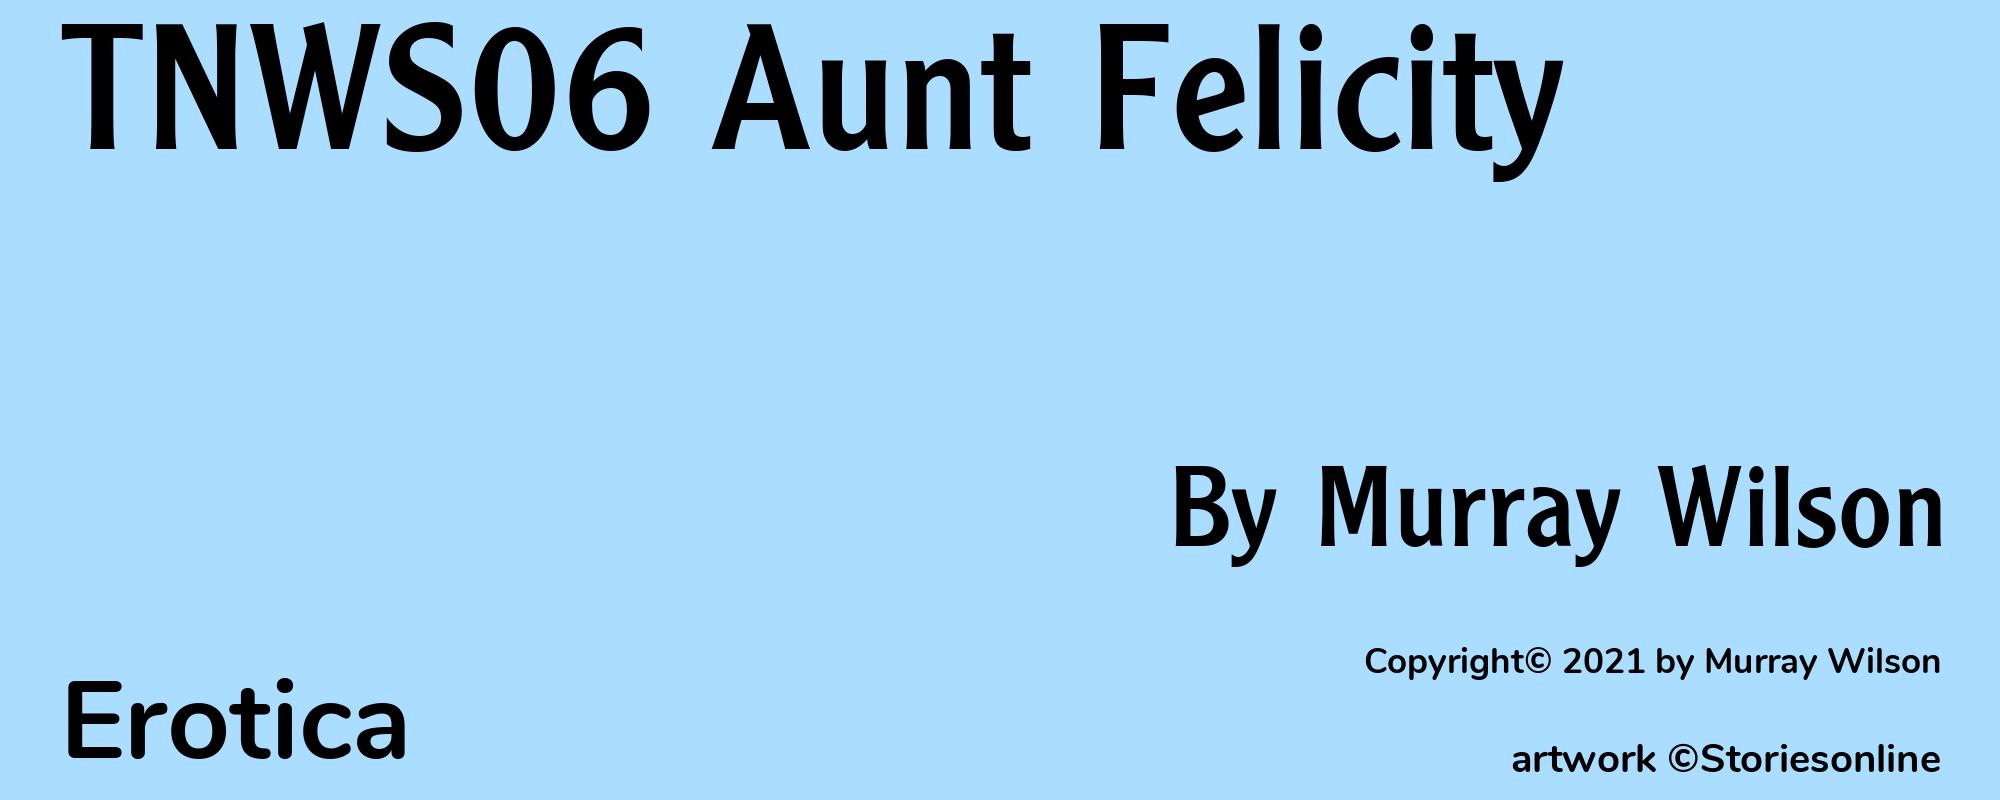 TNWS06 Aunt Felicity - Cover